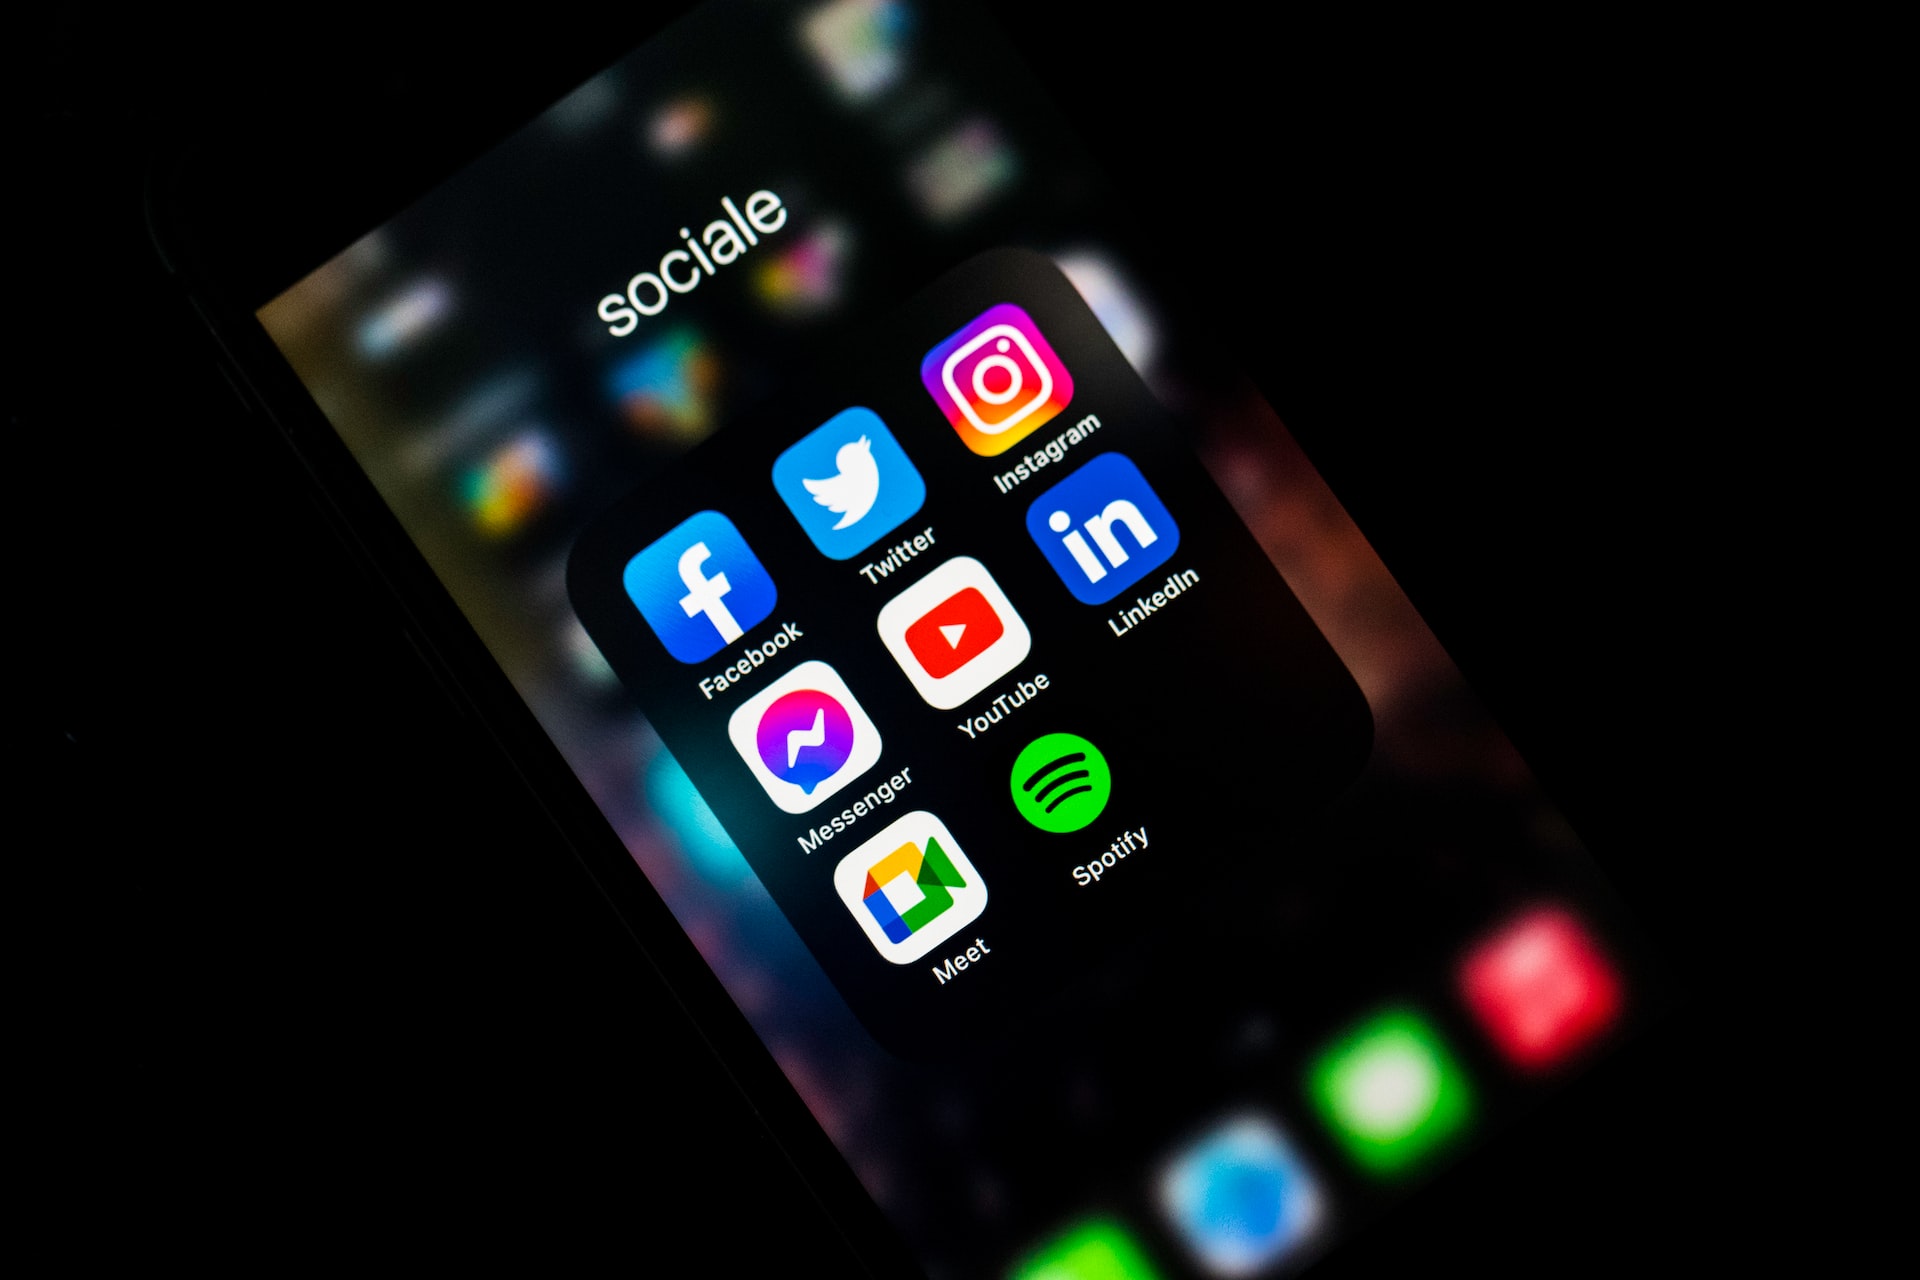 Social media logos displayed on phone